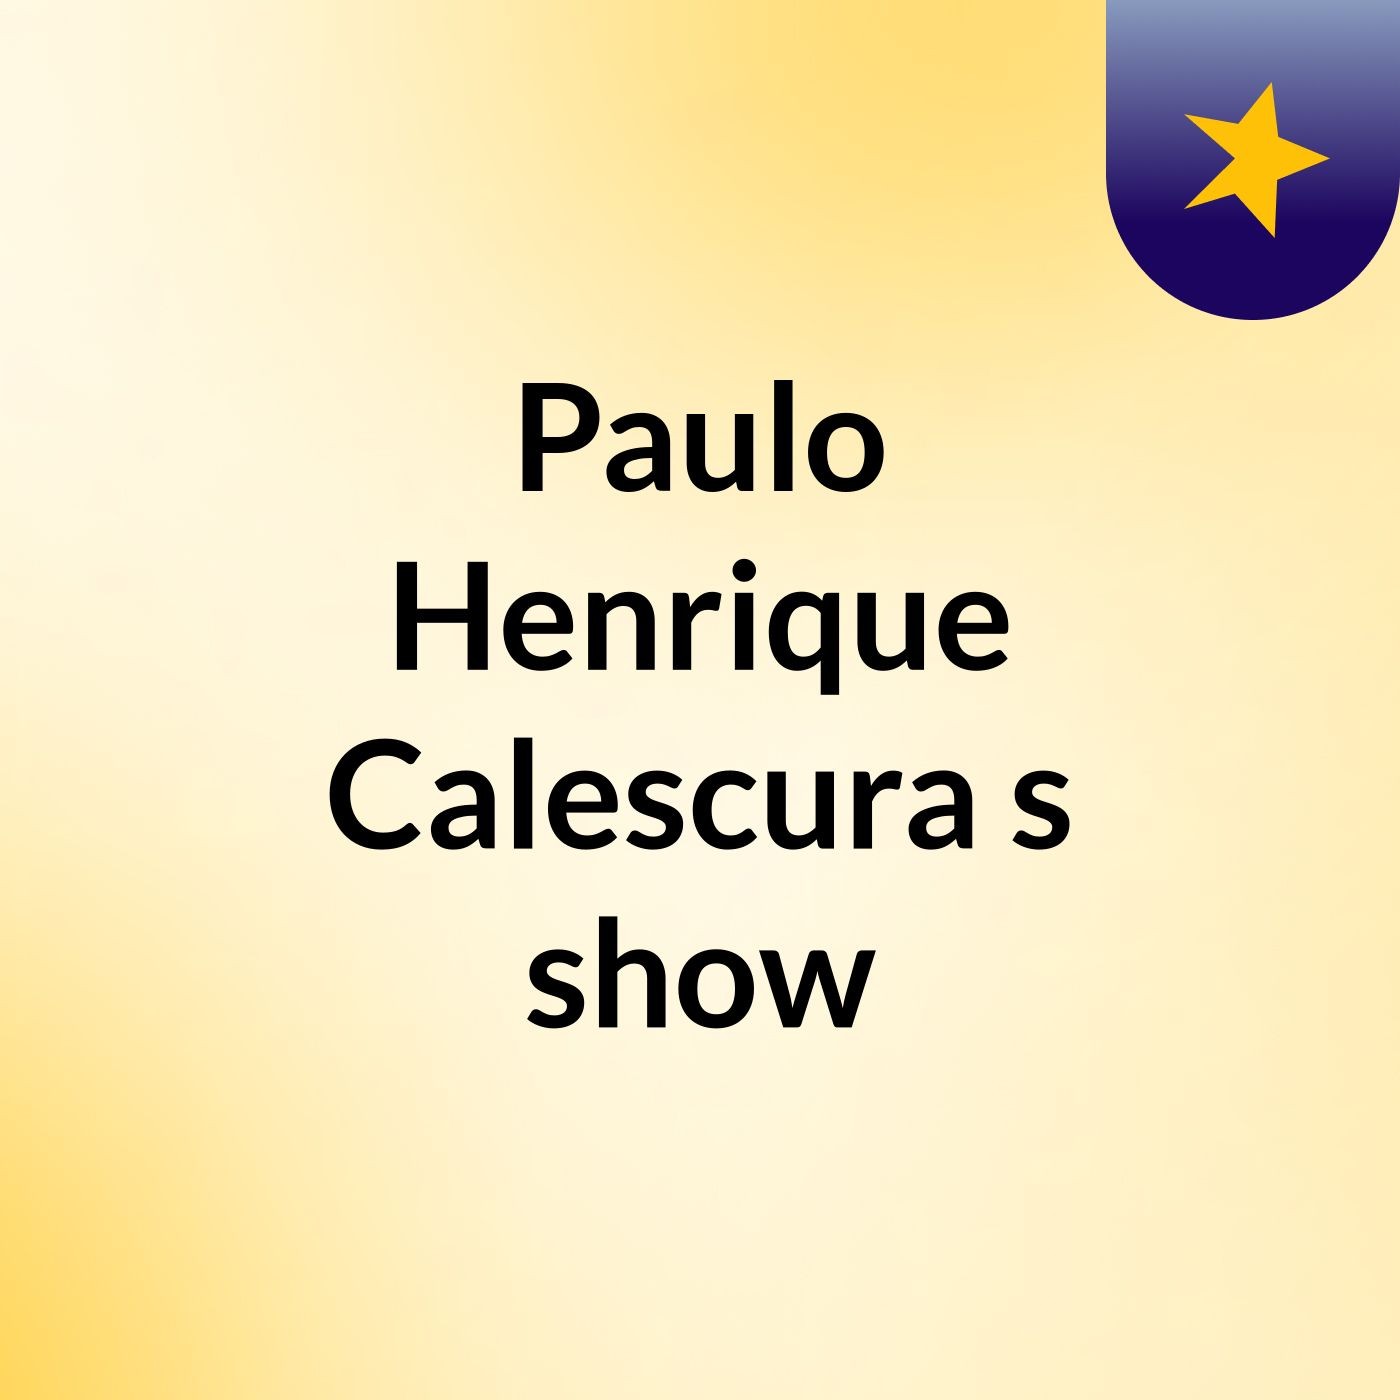 Paulo Henrique Calescura's show